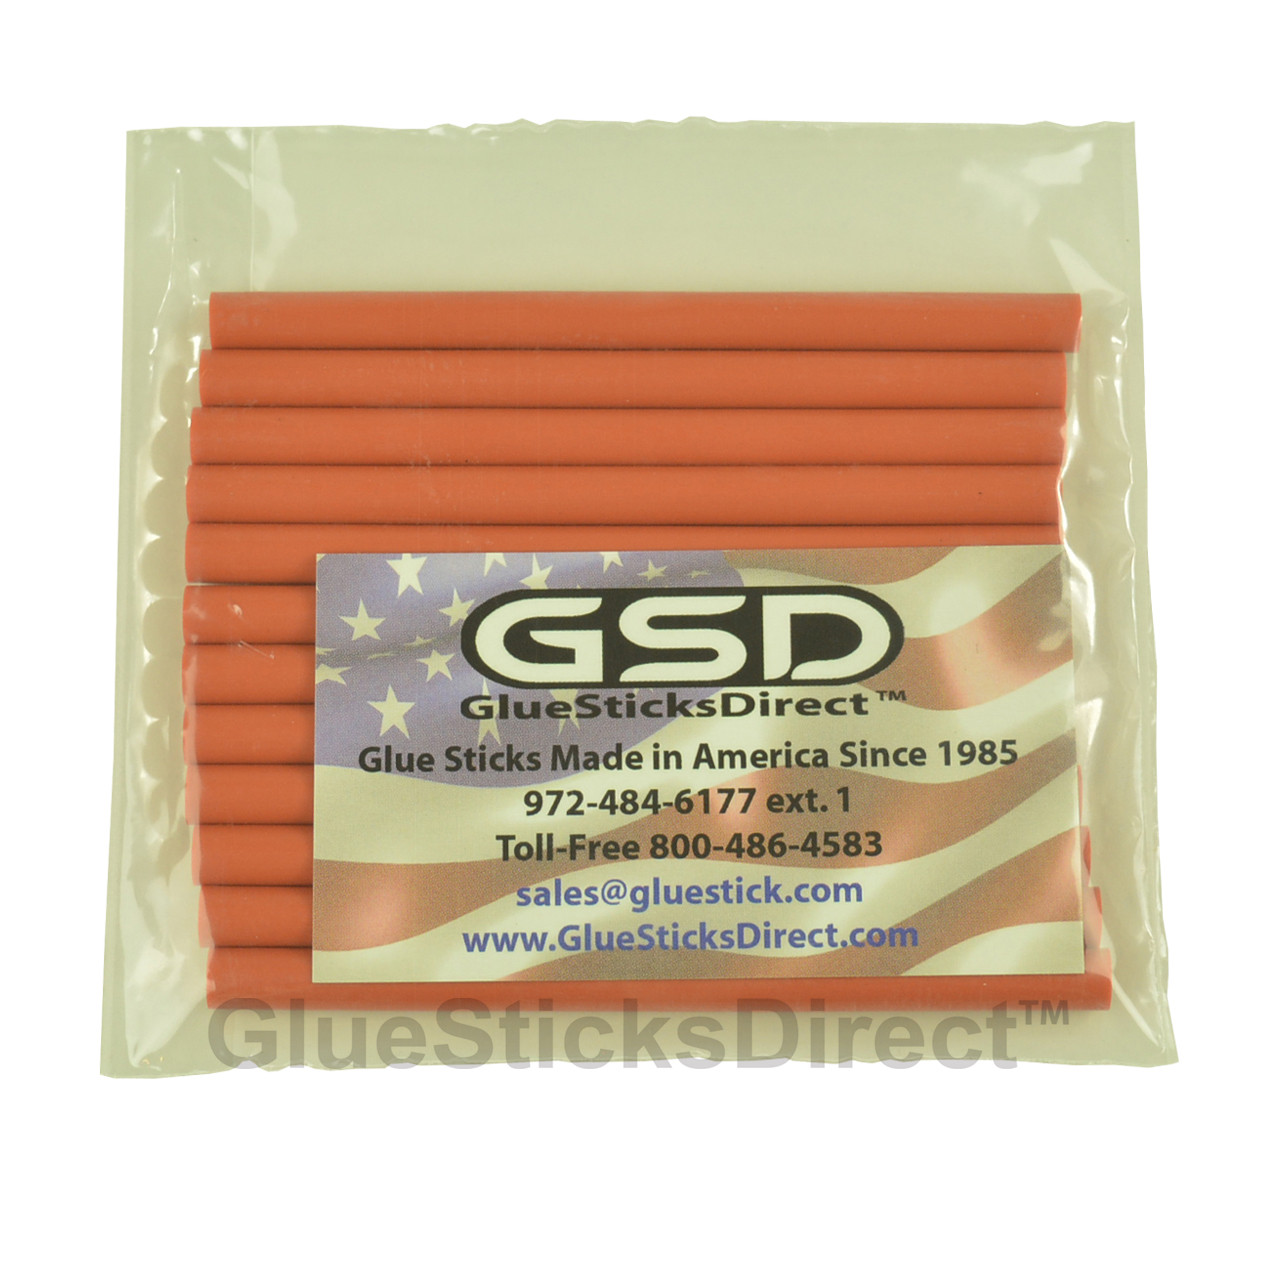 GlueSticksDirect Burnt Orange Colored Glue Sticks Mini X 4" 24 Sticks